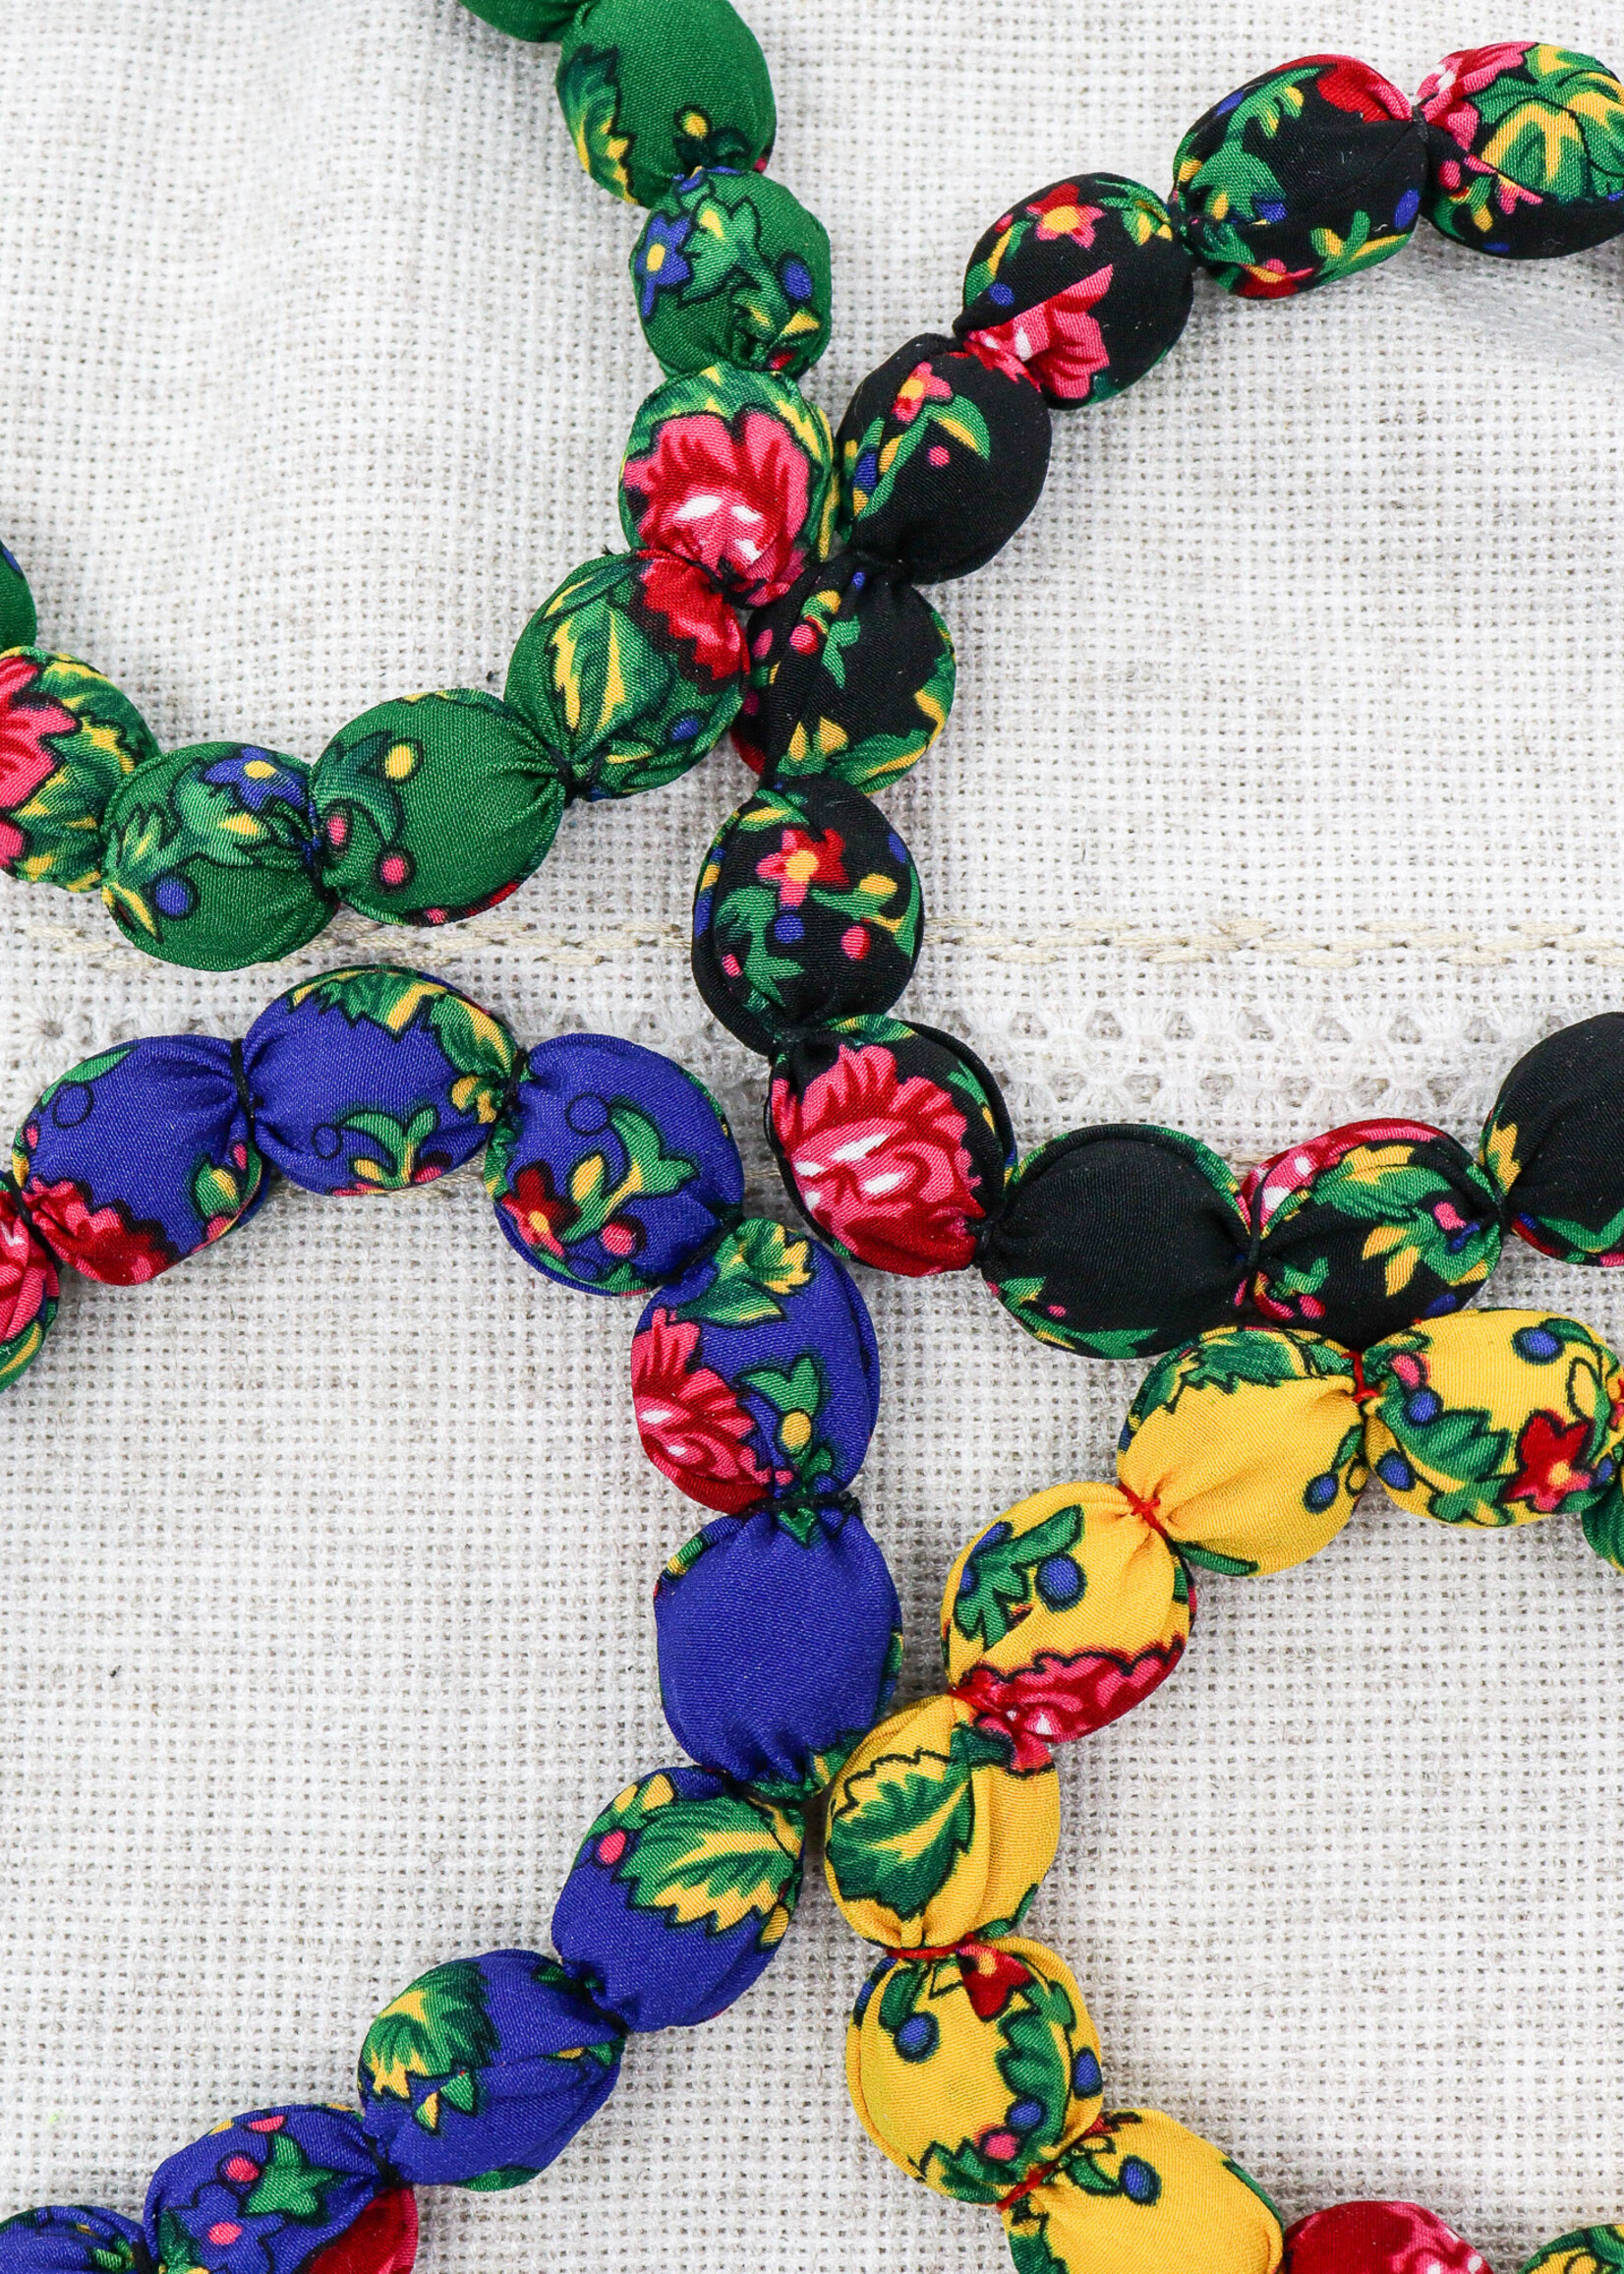 ACCESSORIES - Necklace  Handmade of Wooden Beads / Hustka Fabrics